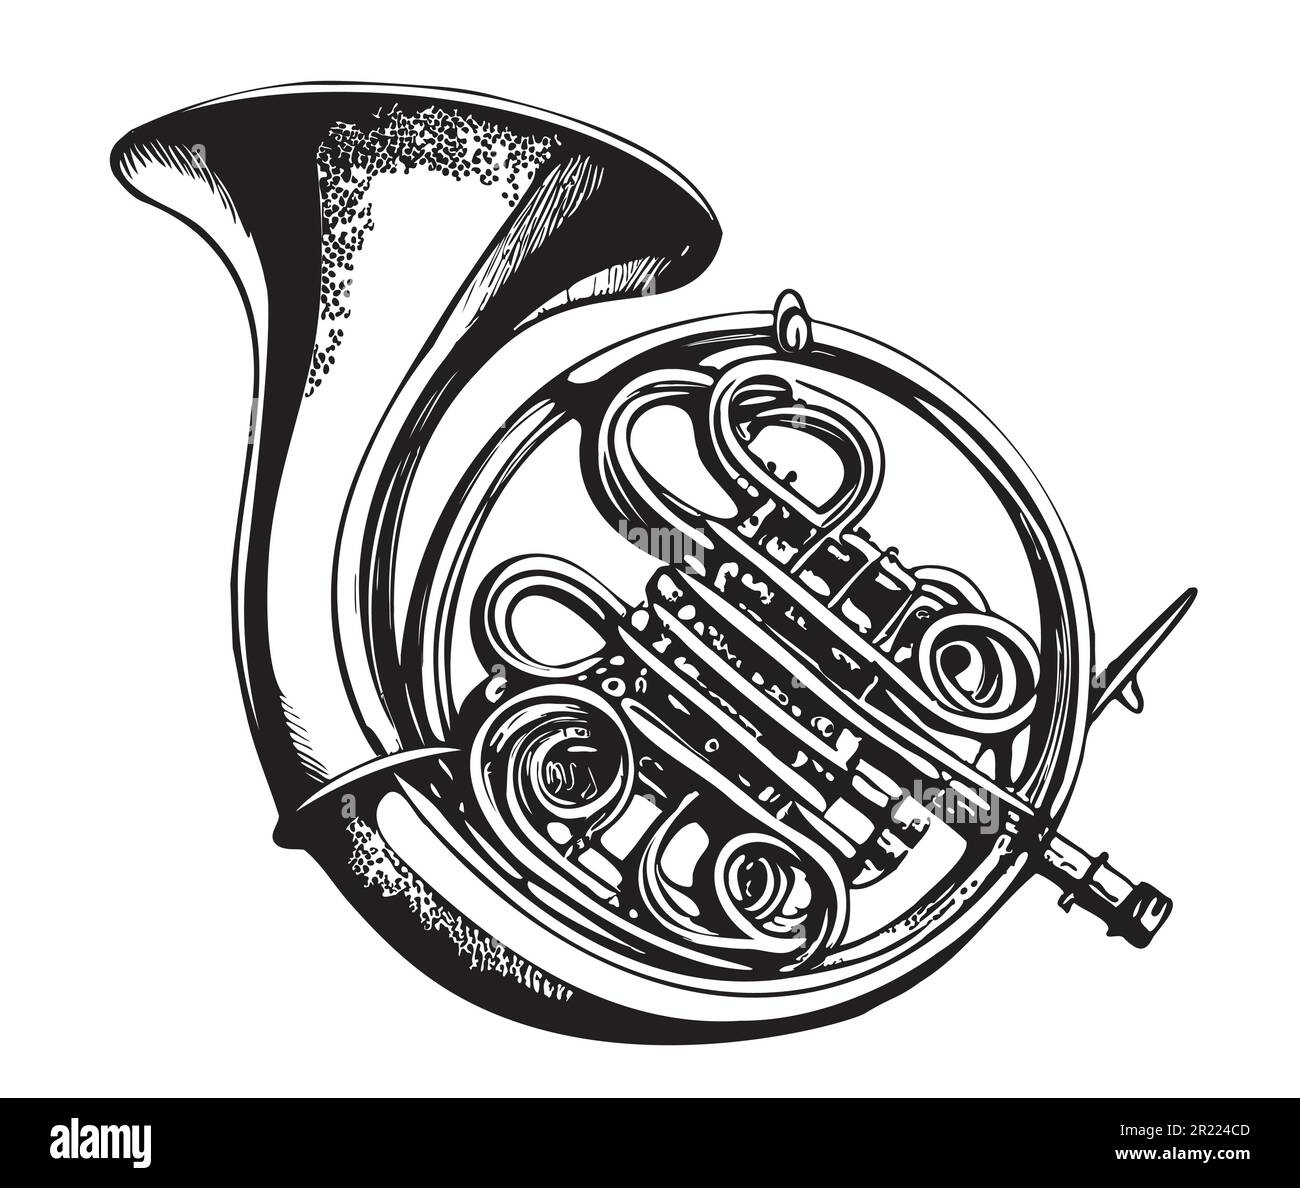 Französisches Horn, handgezeichnet, im Kritzelstil Vektor-Illustration Musik Stock Vektor